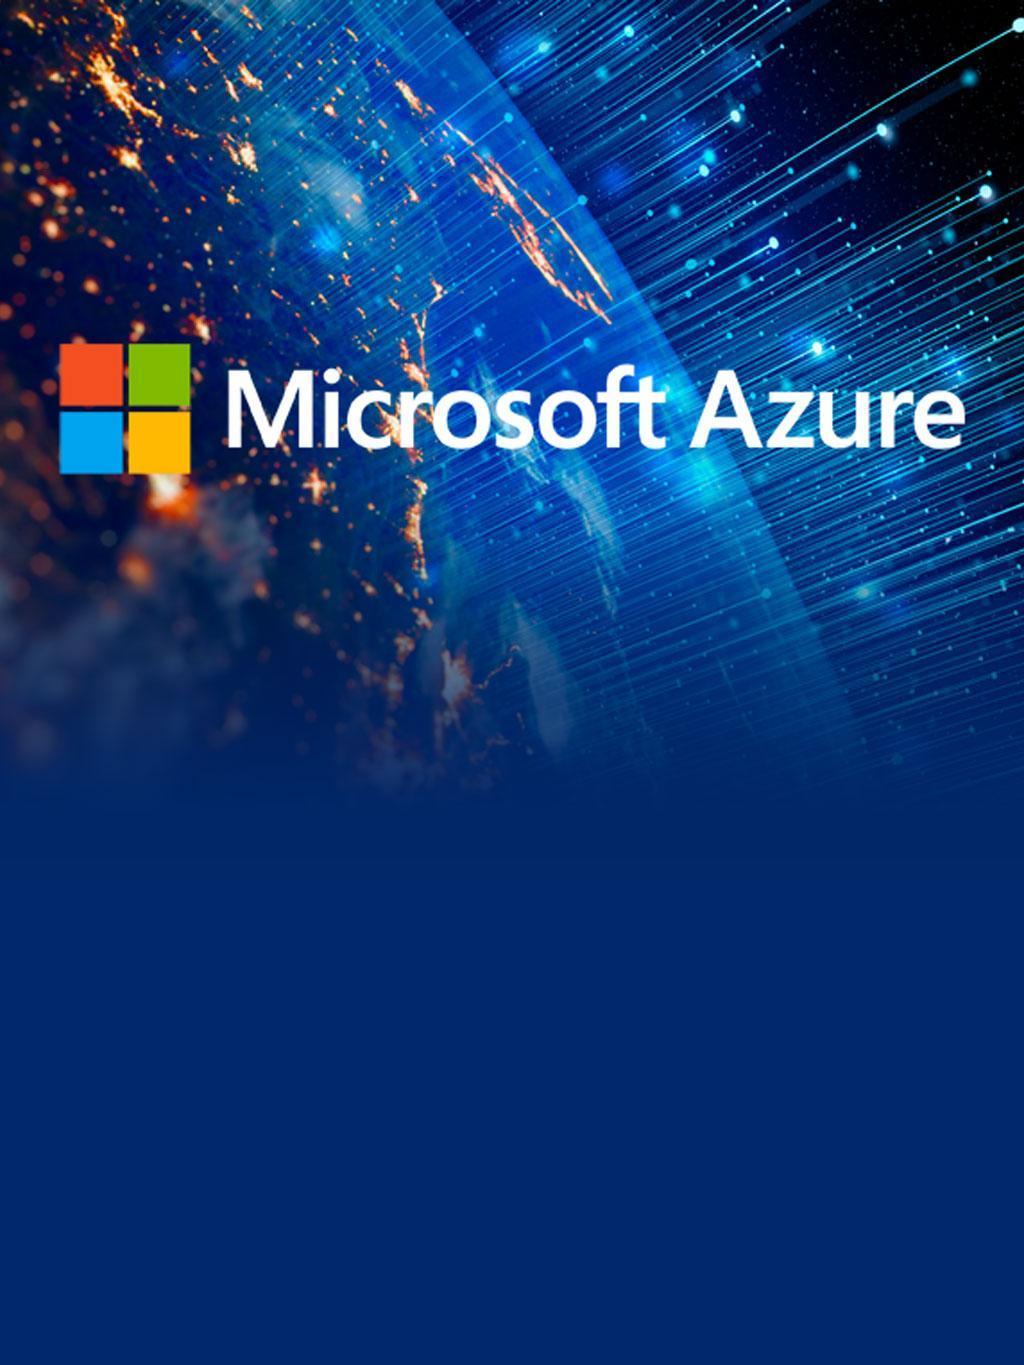 Microsoft Azure - Intelifi